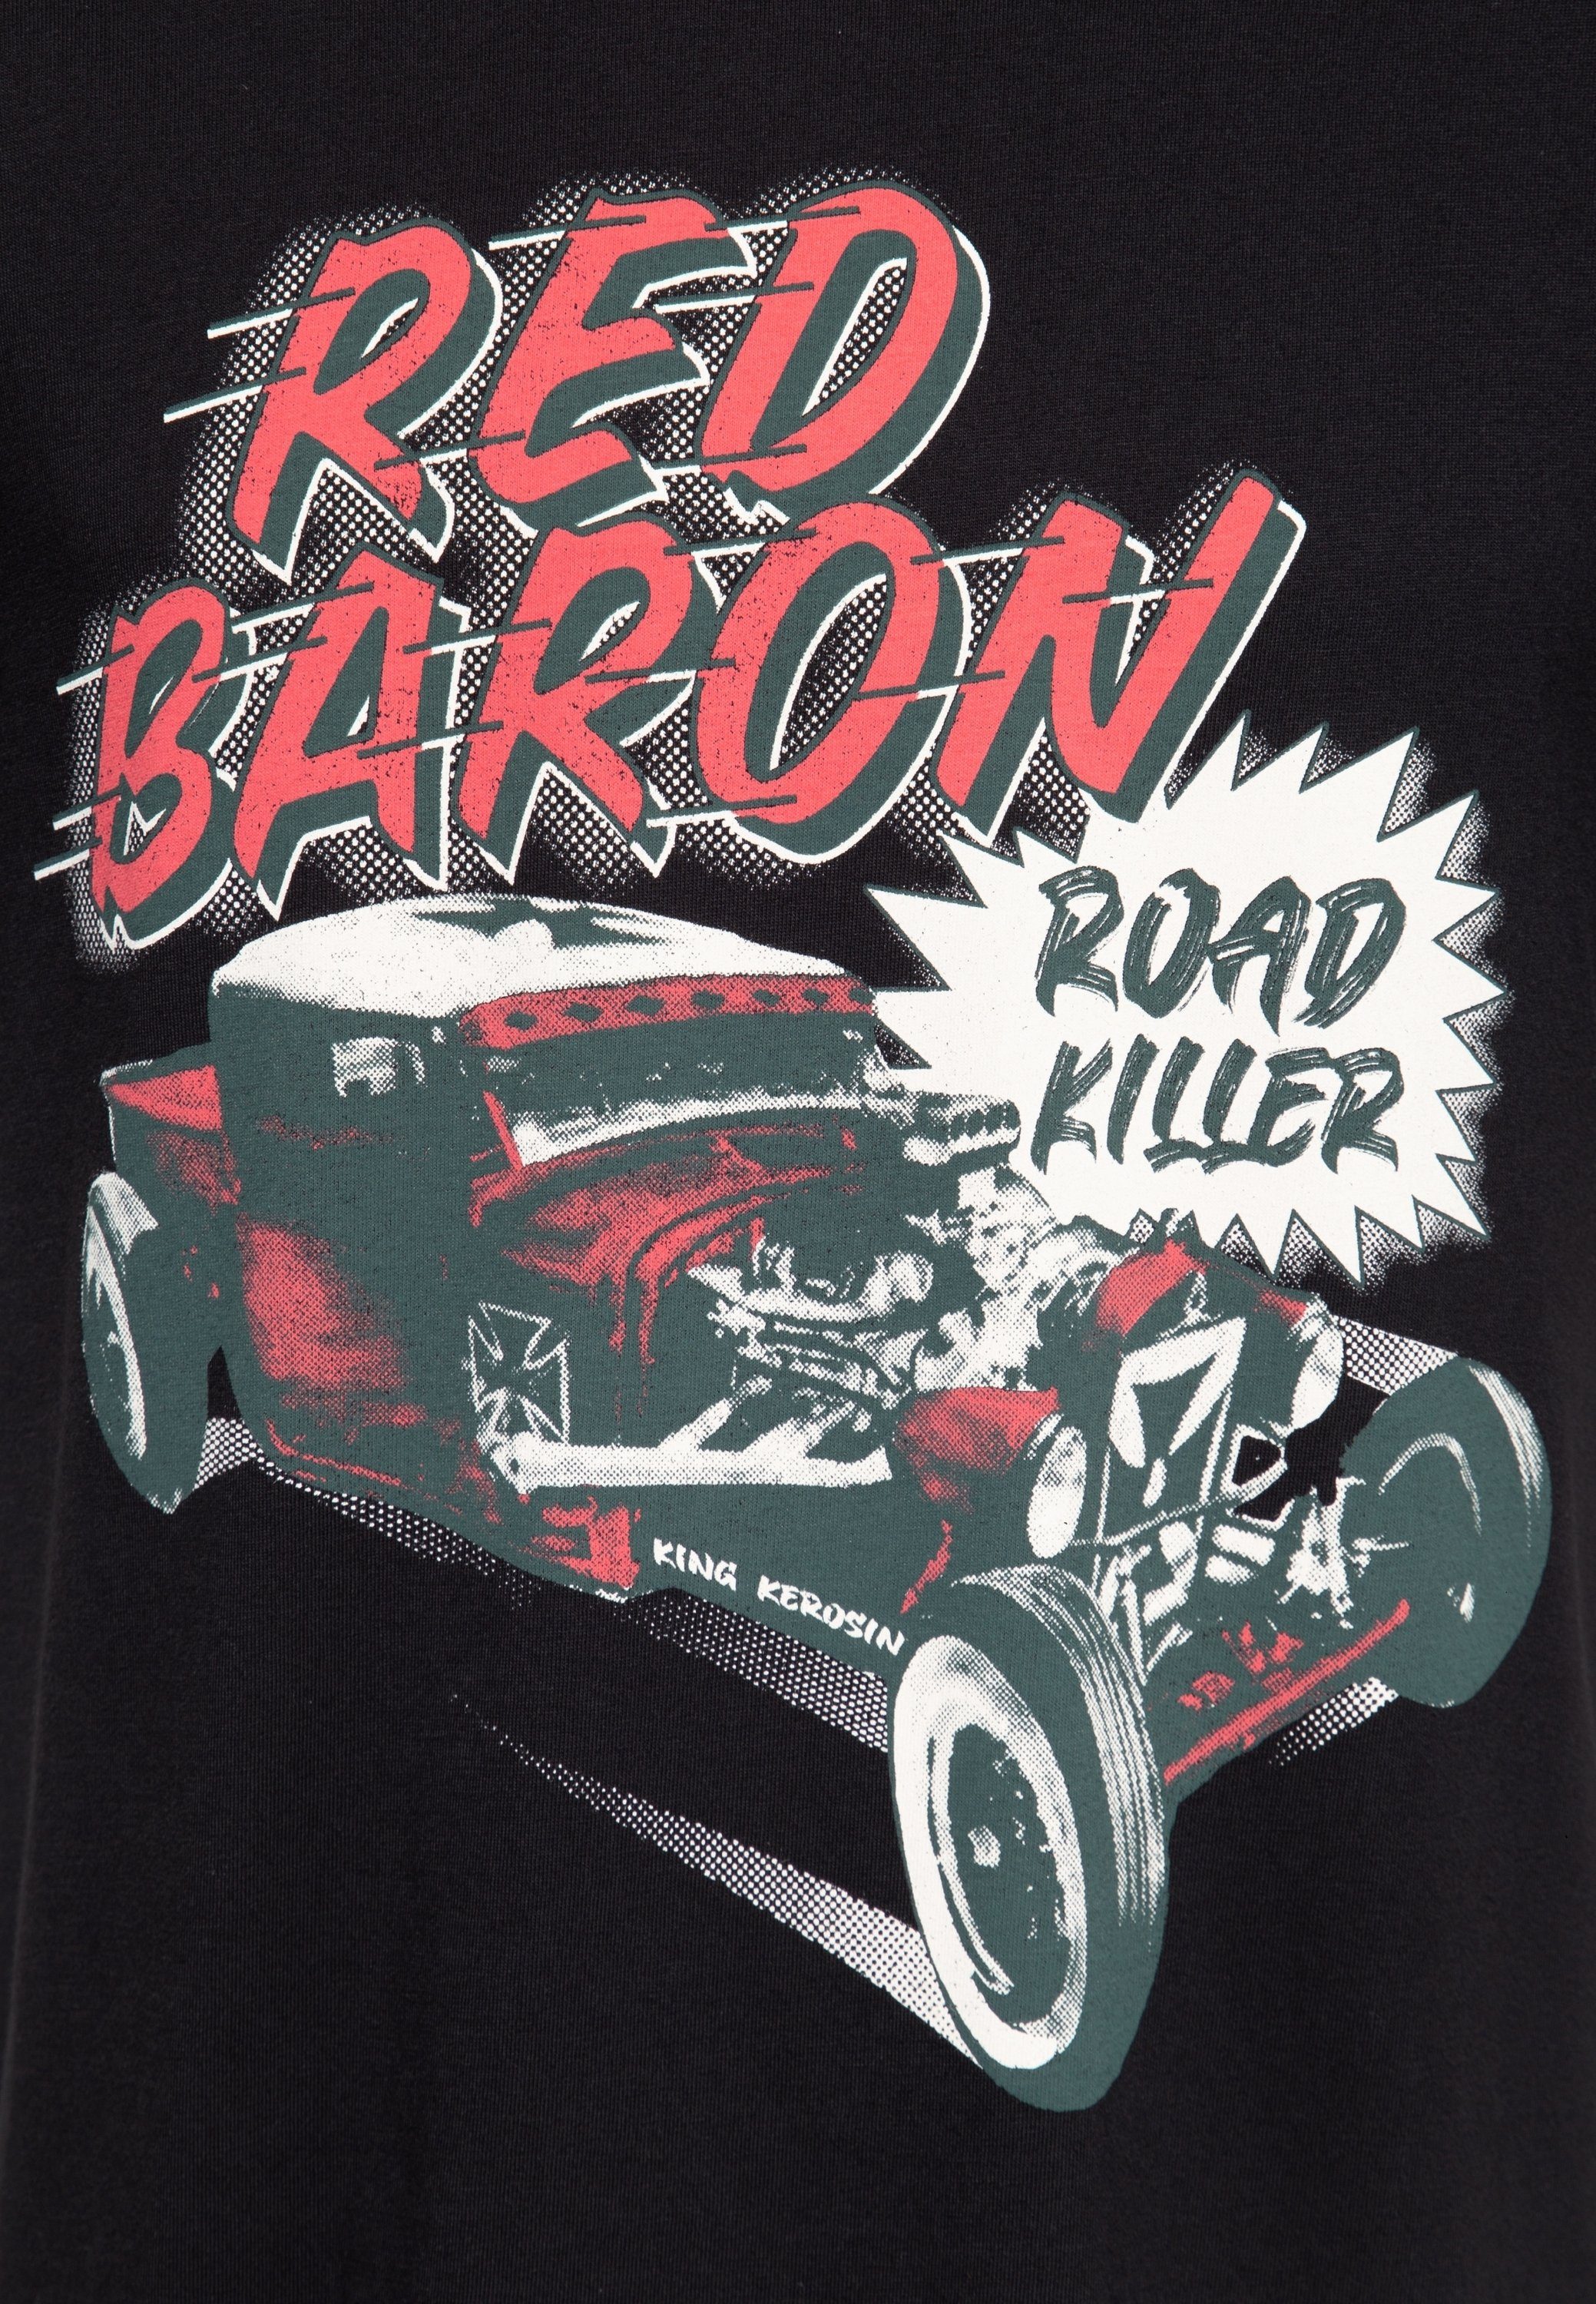 Roadkiller KingKerosin Red Rod Hot Baron T-Shirt Print mit